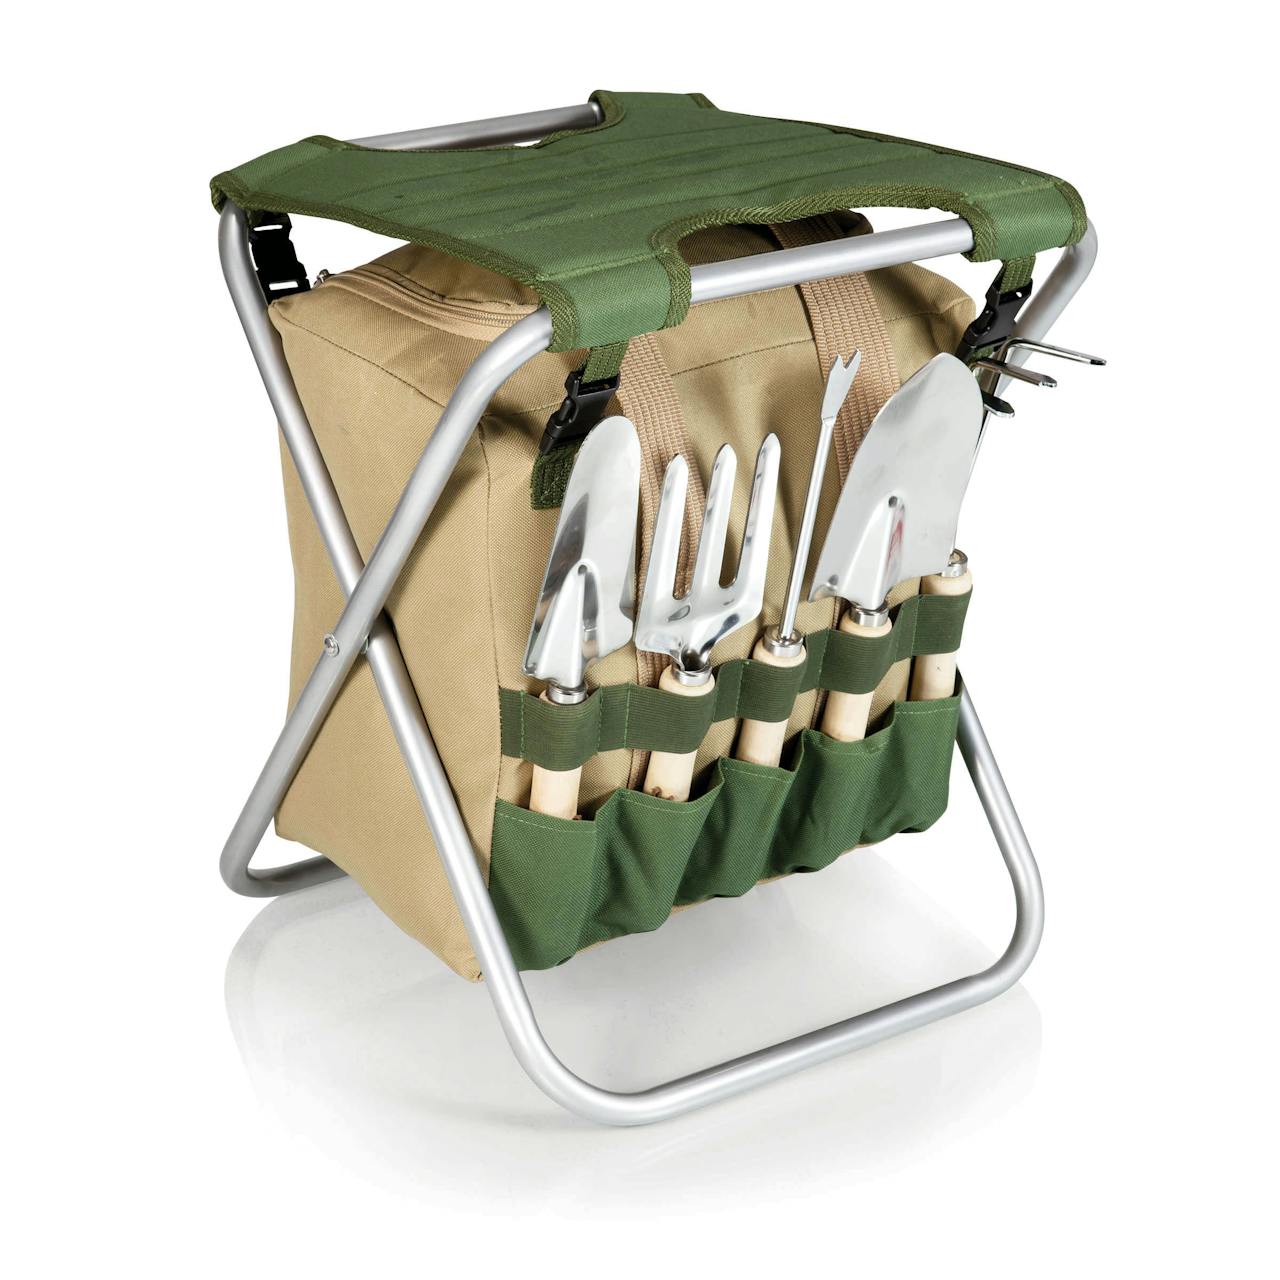 Oniva Folding Gardener Seat with Tools